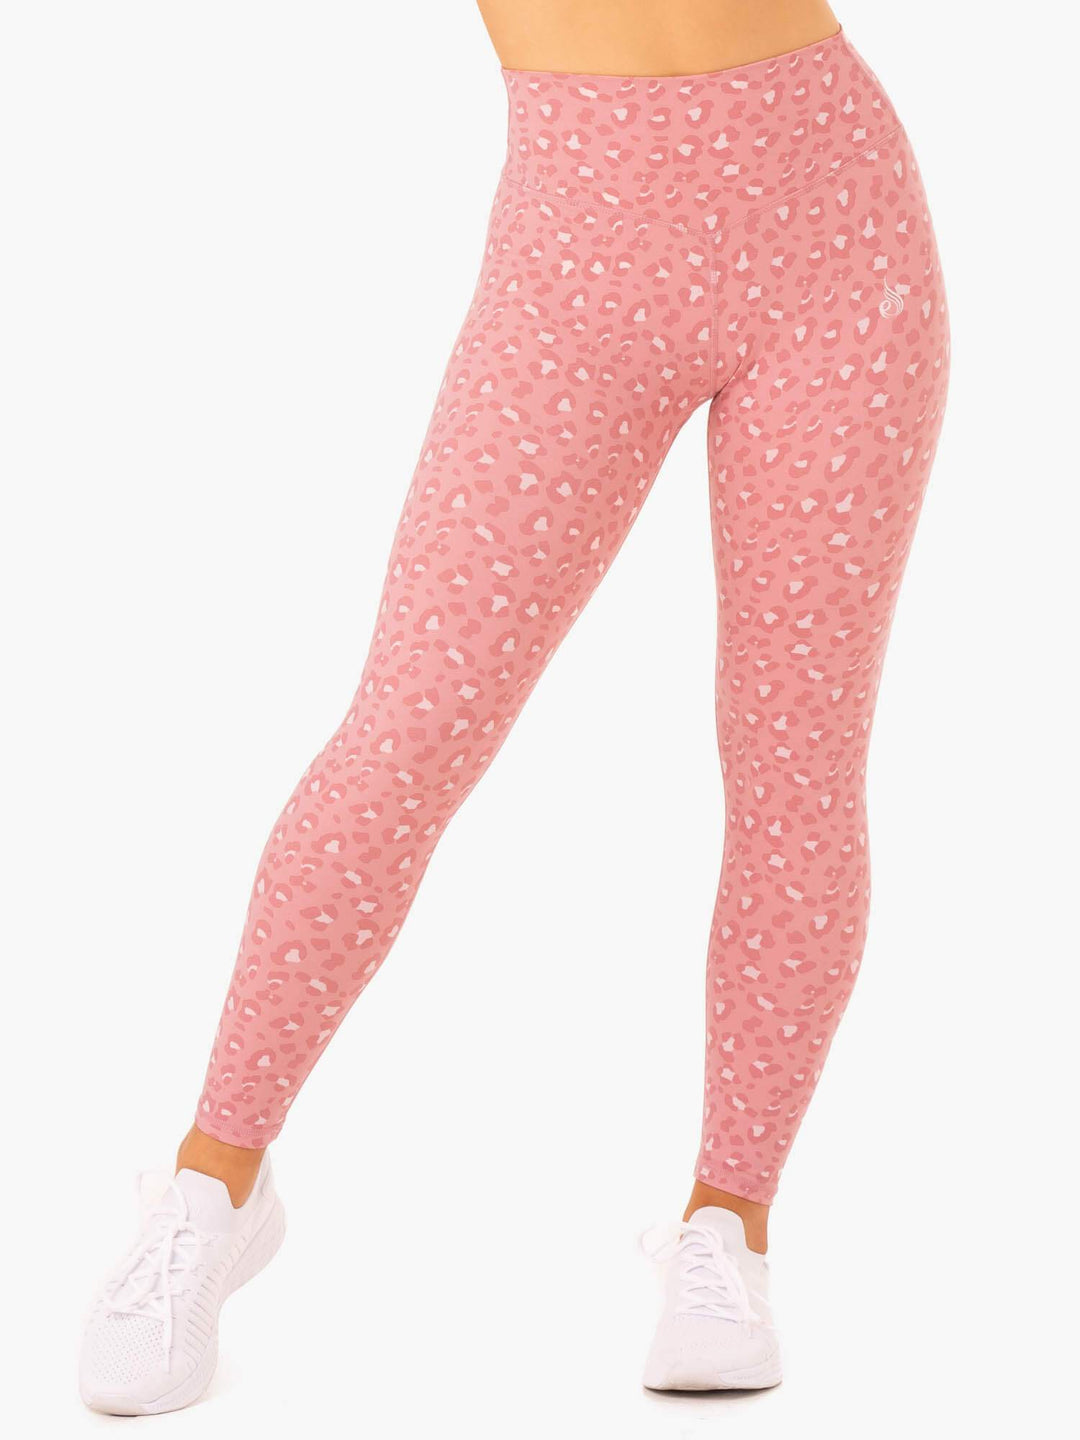 Hybrid Full Length Gym Leggings - Pink Leopard Clothing Ryderwear 